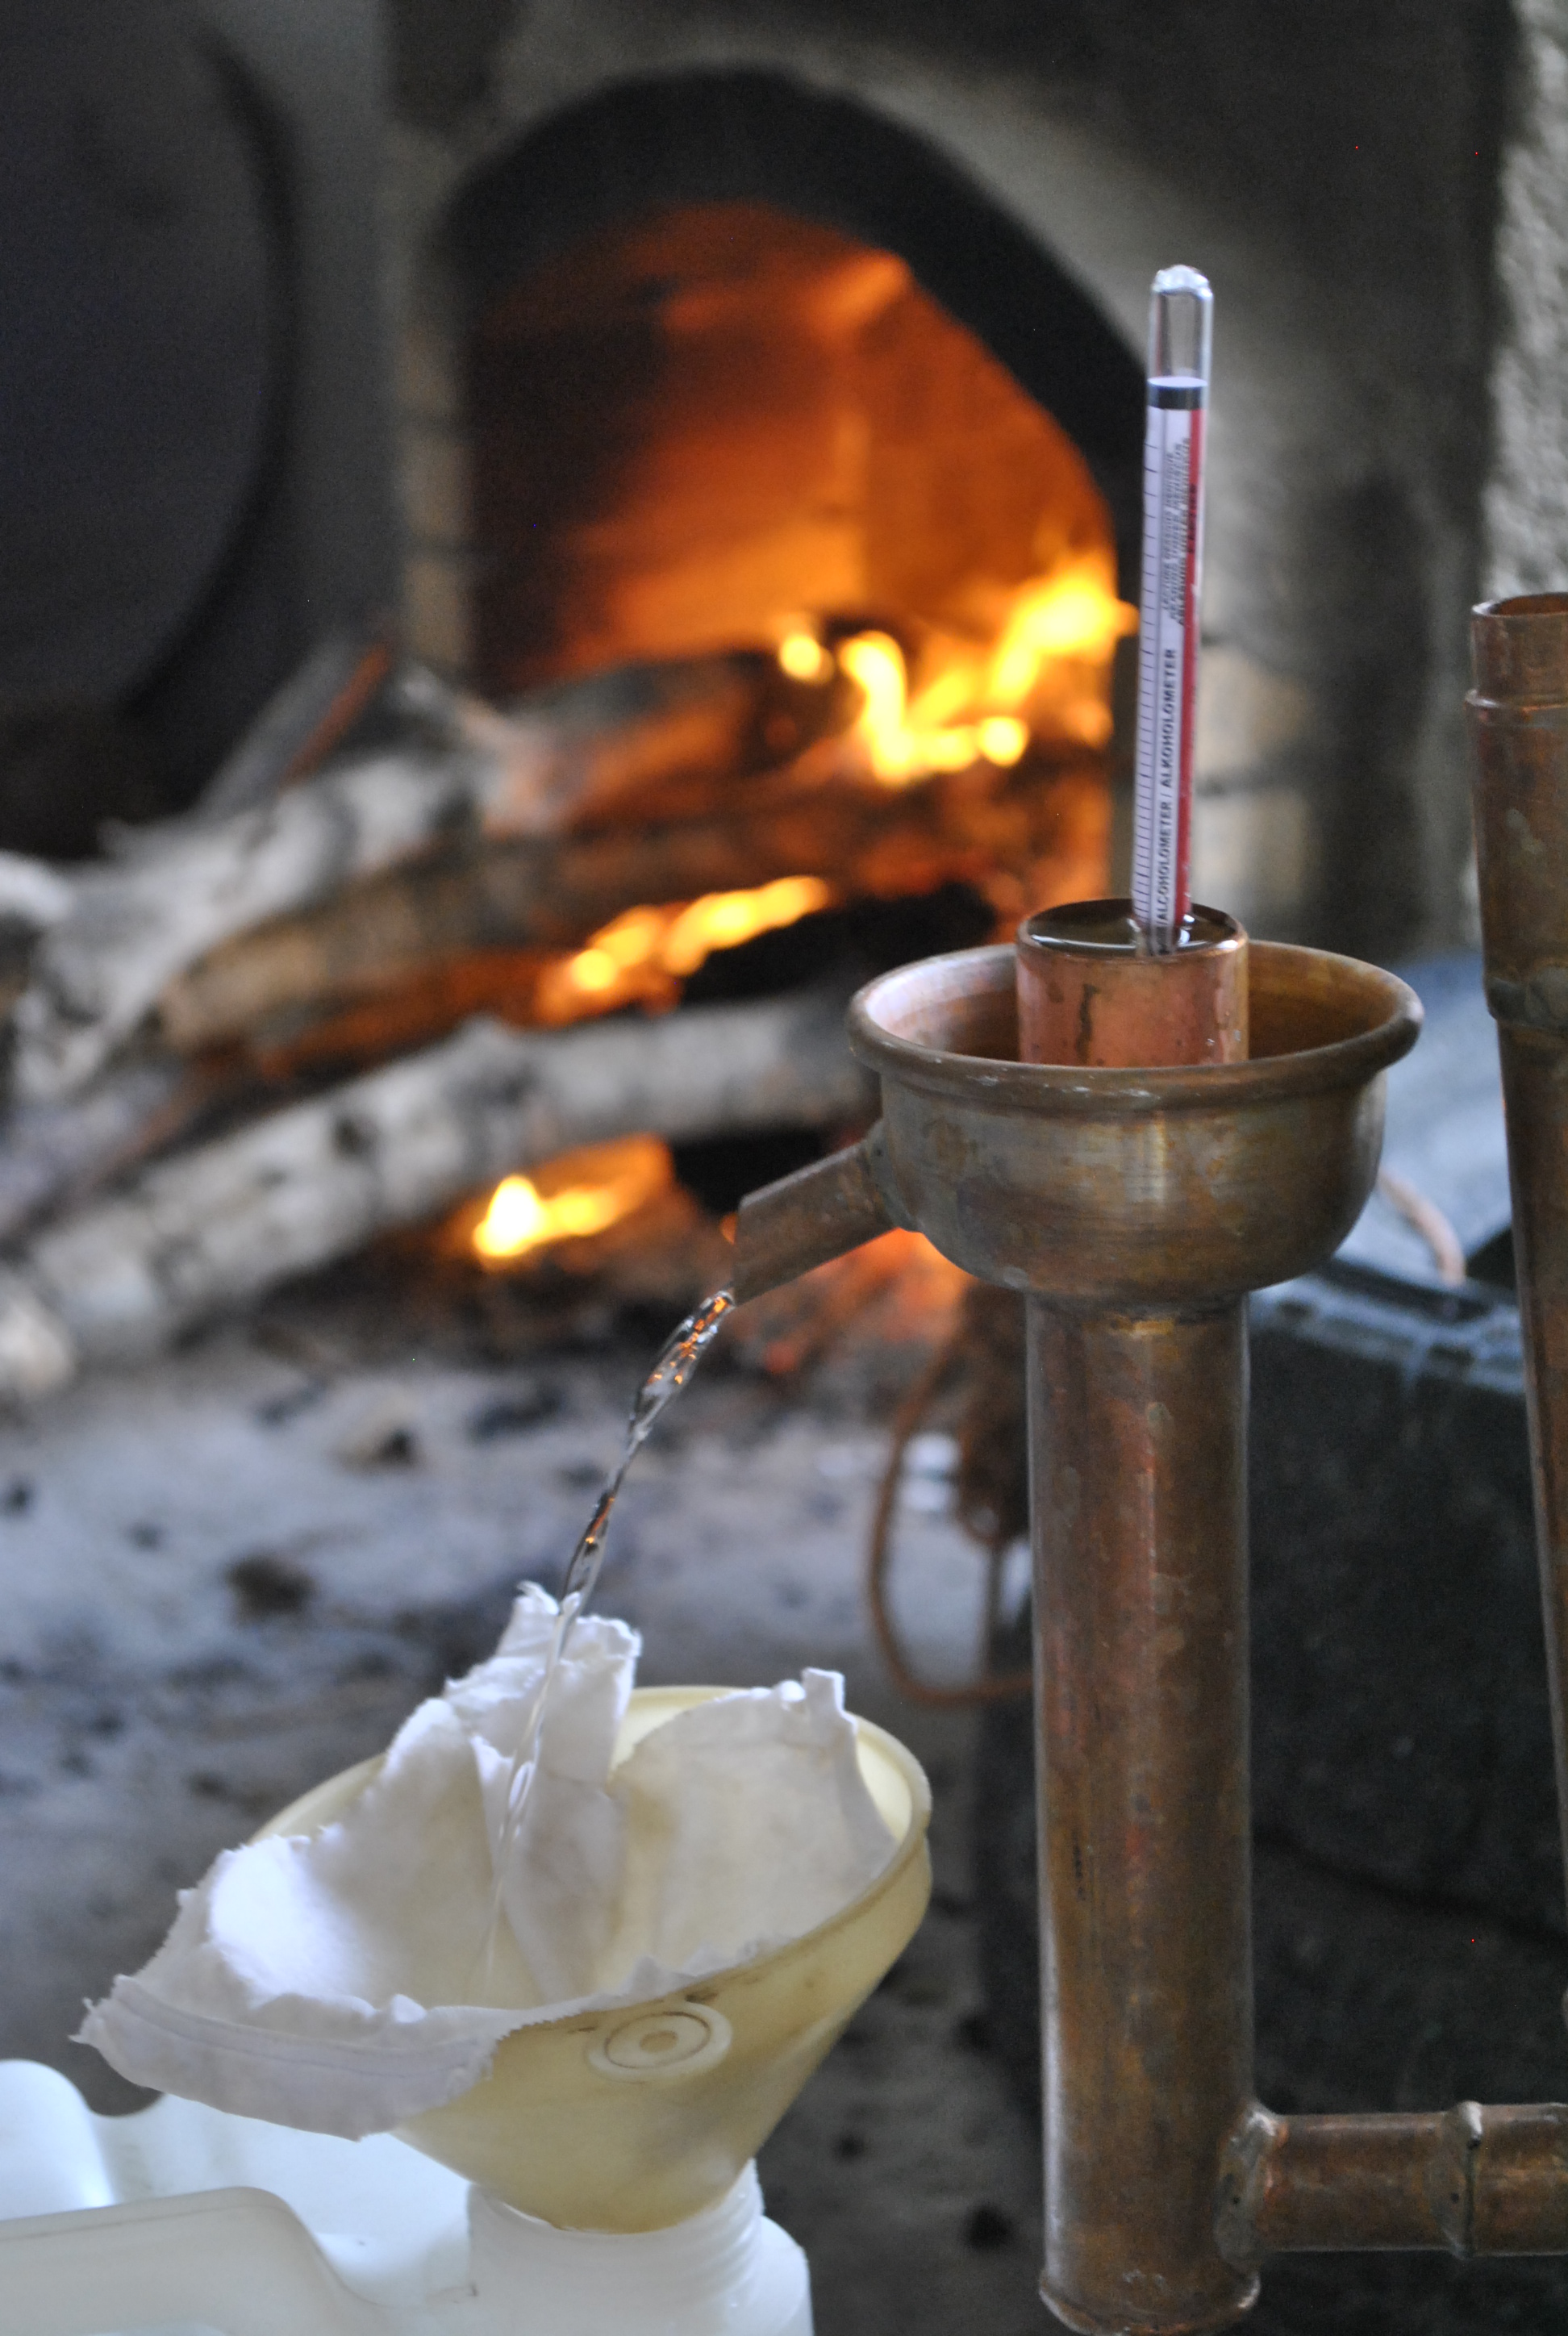 The distillation process of making Raki